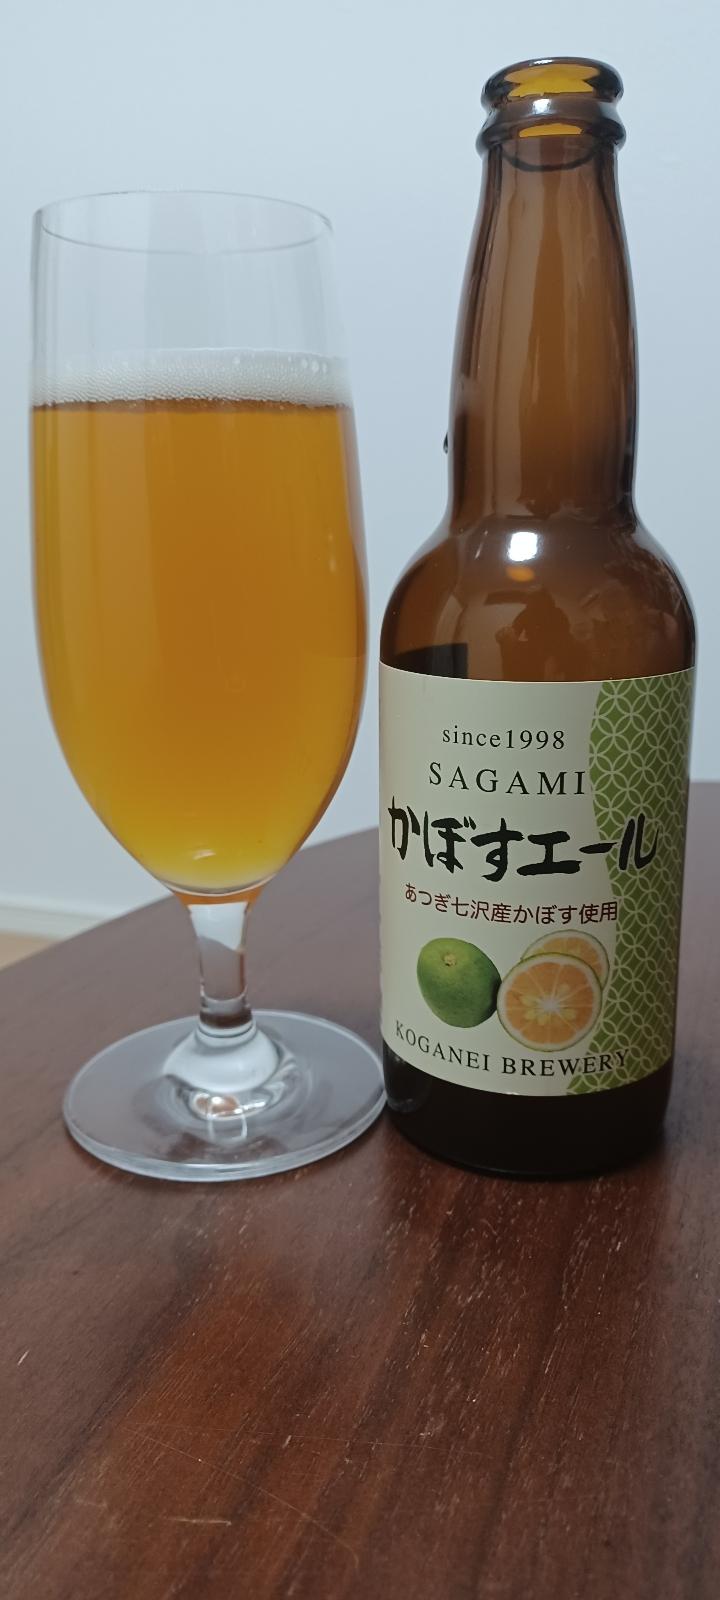 Sagami Kabosu